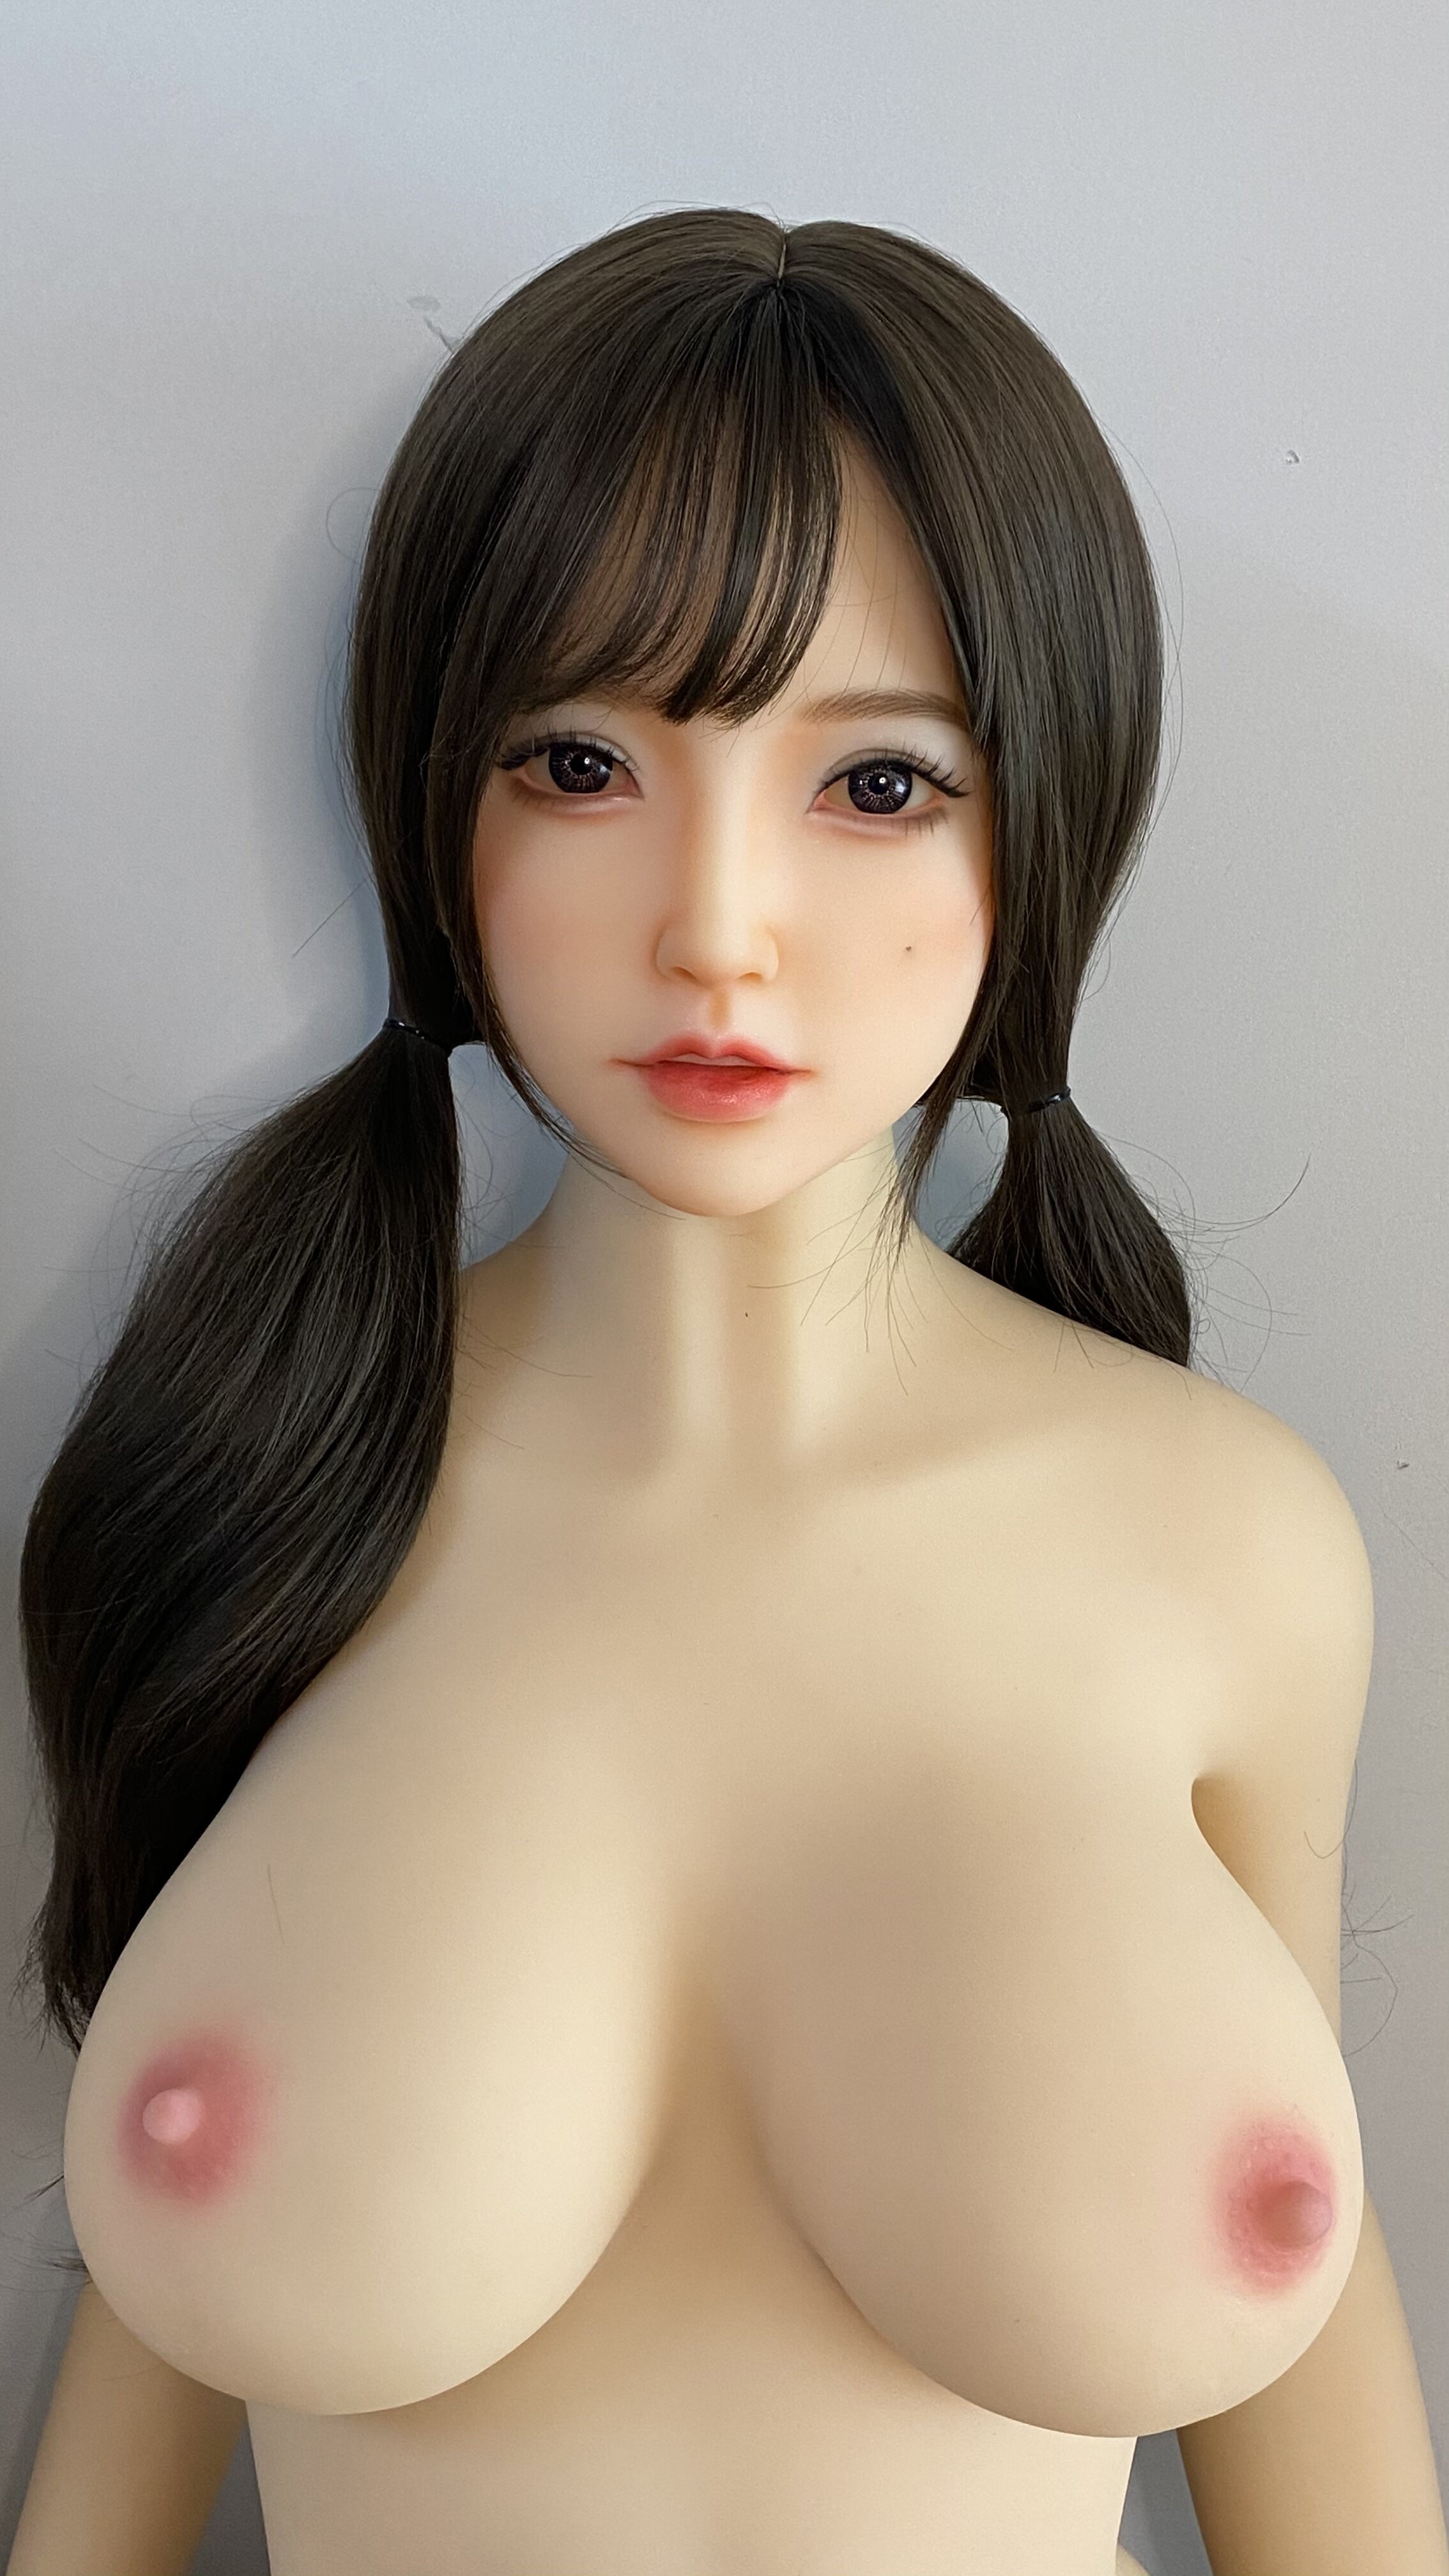 Adult Erotica Sex Doll for Men Full Reality Vagina 165cm/5.41ft